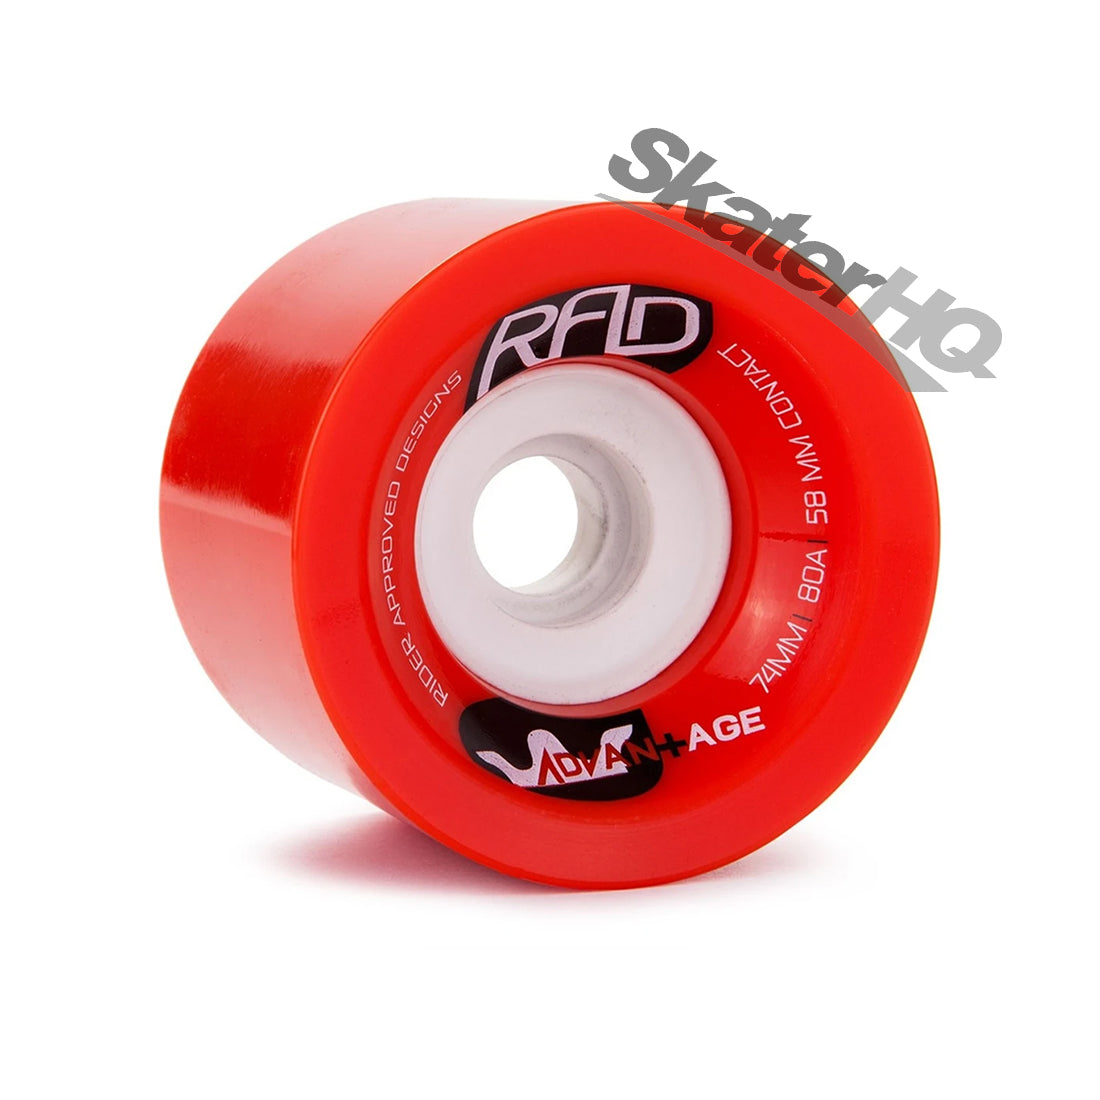 RAD Advantage 74x61mm/80a 4pk Red Skateboard Wheels